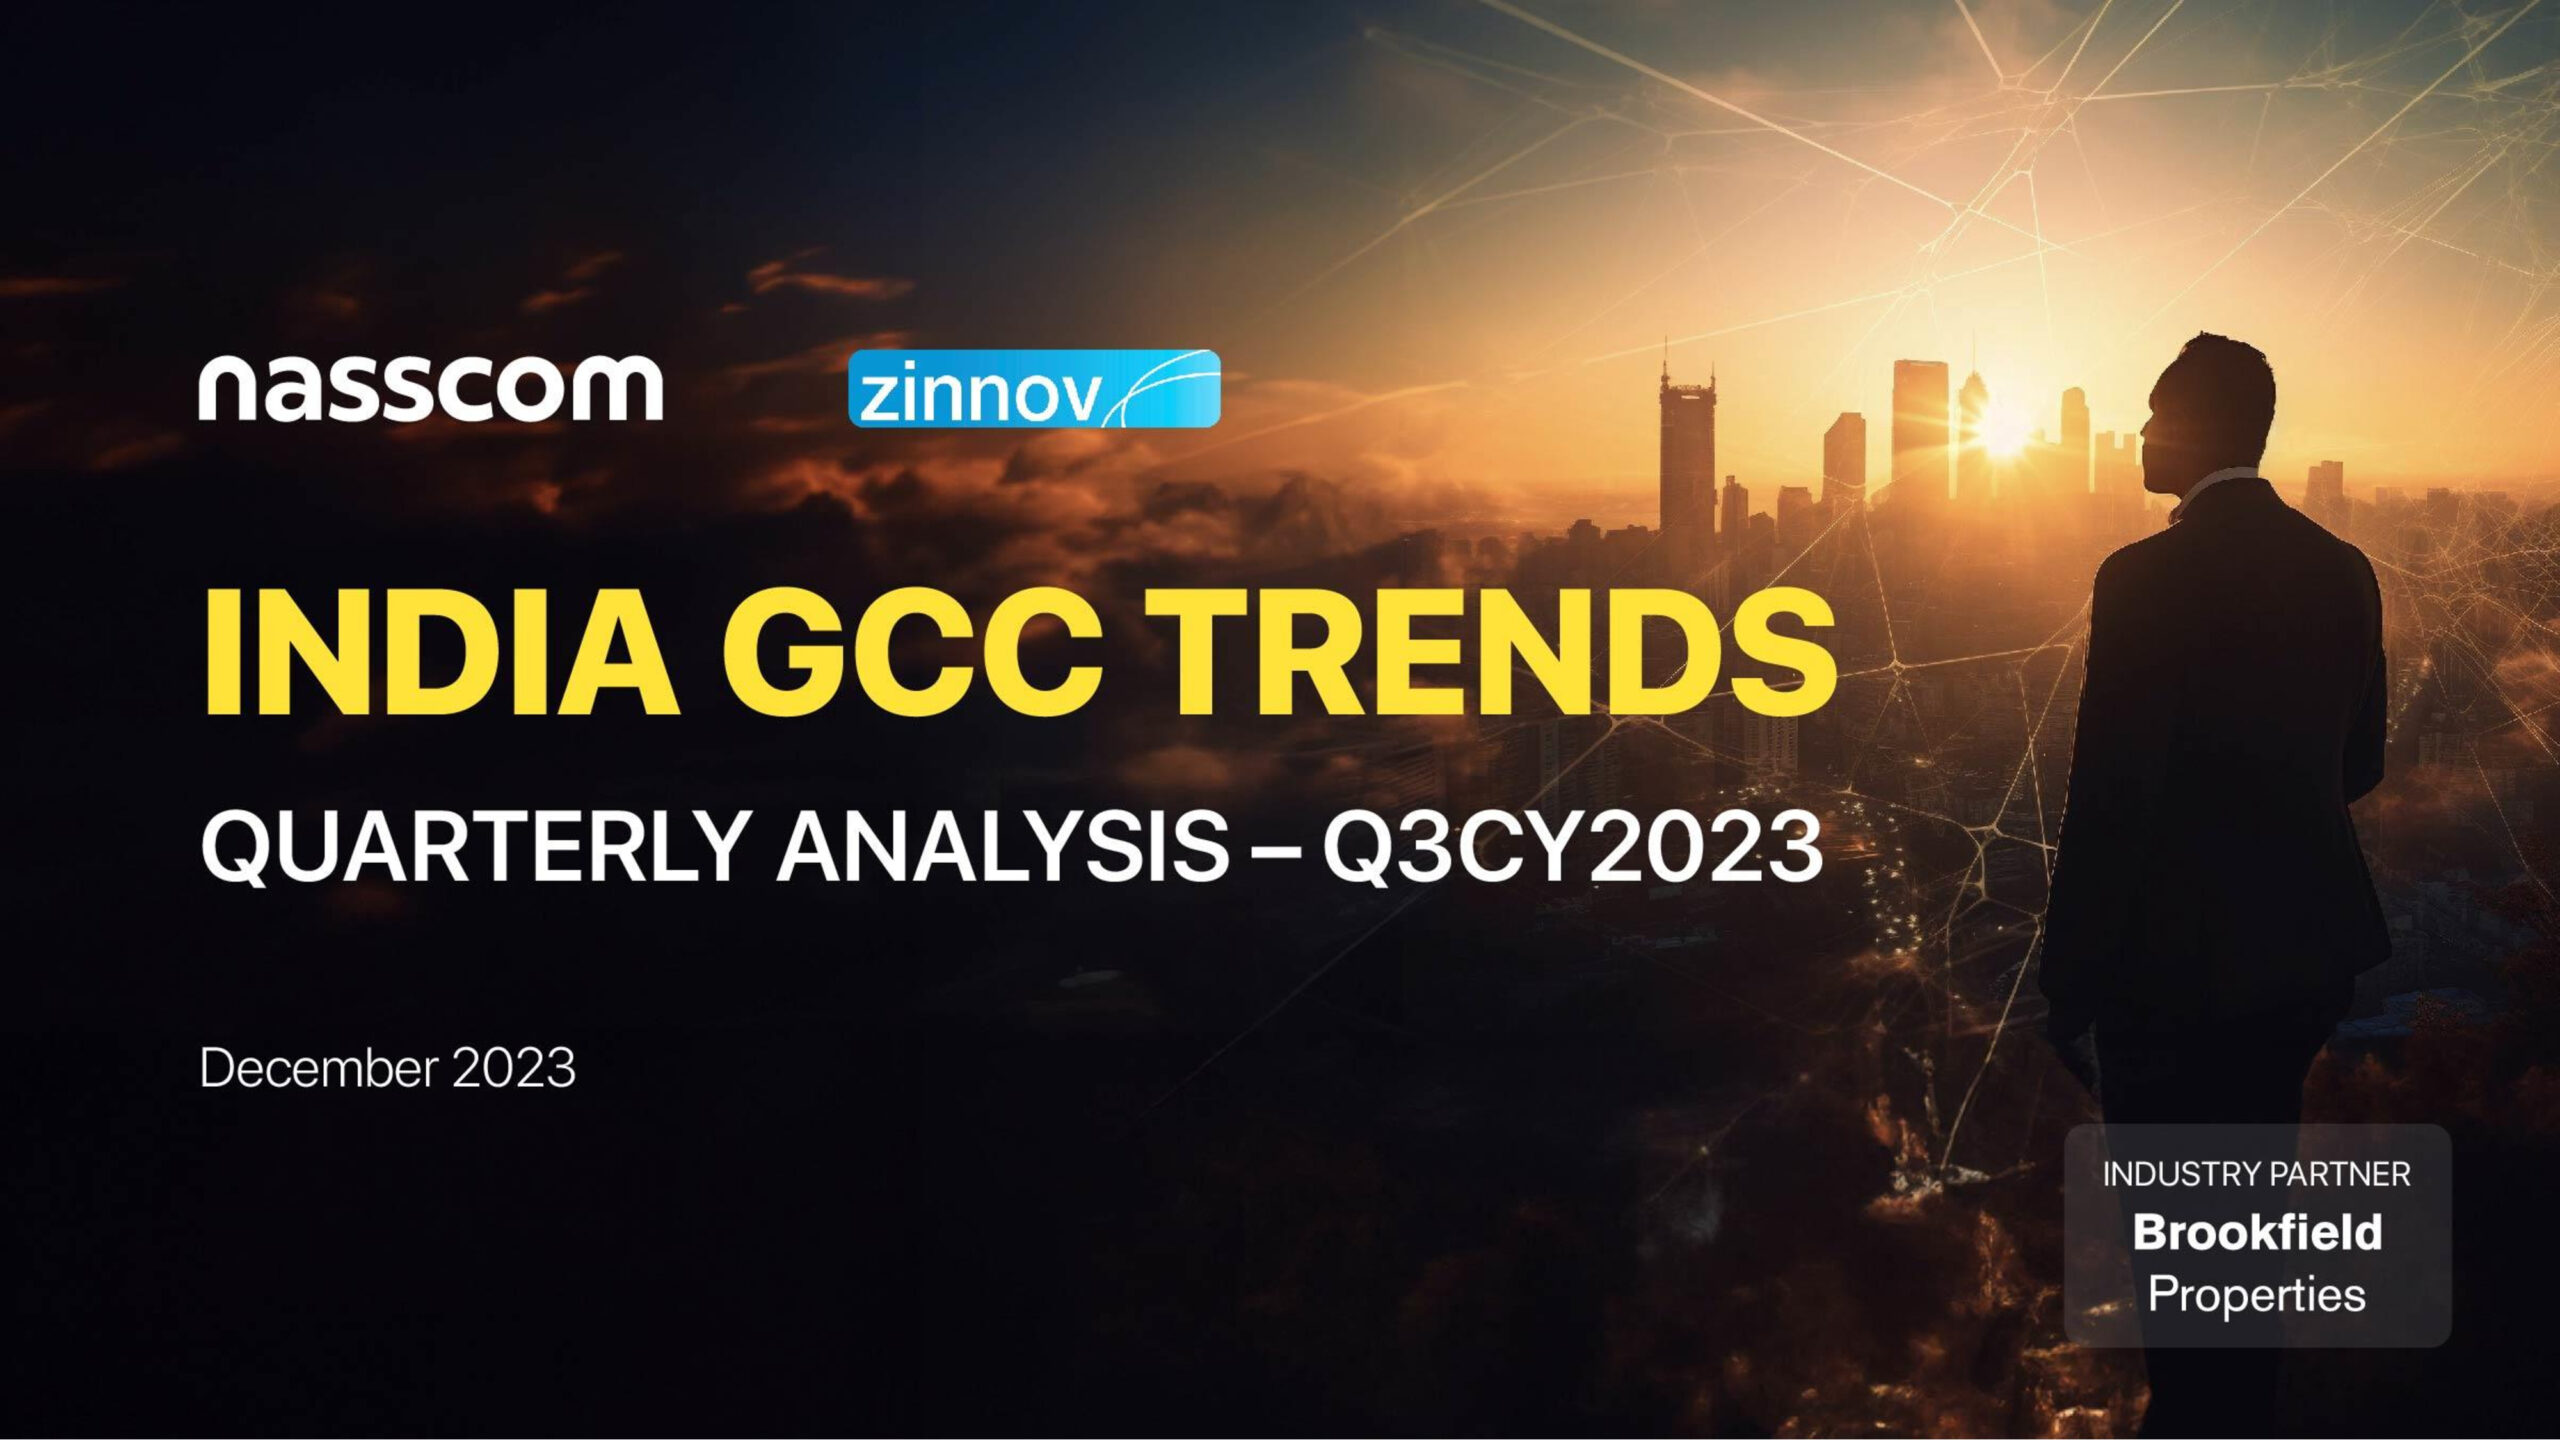 Zinnov Nasscom India Gcc Trends Quarterly Analysis Q3 2023 Report 11dec20231 Scaled